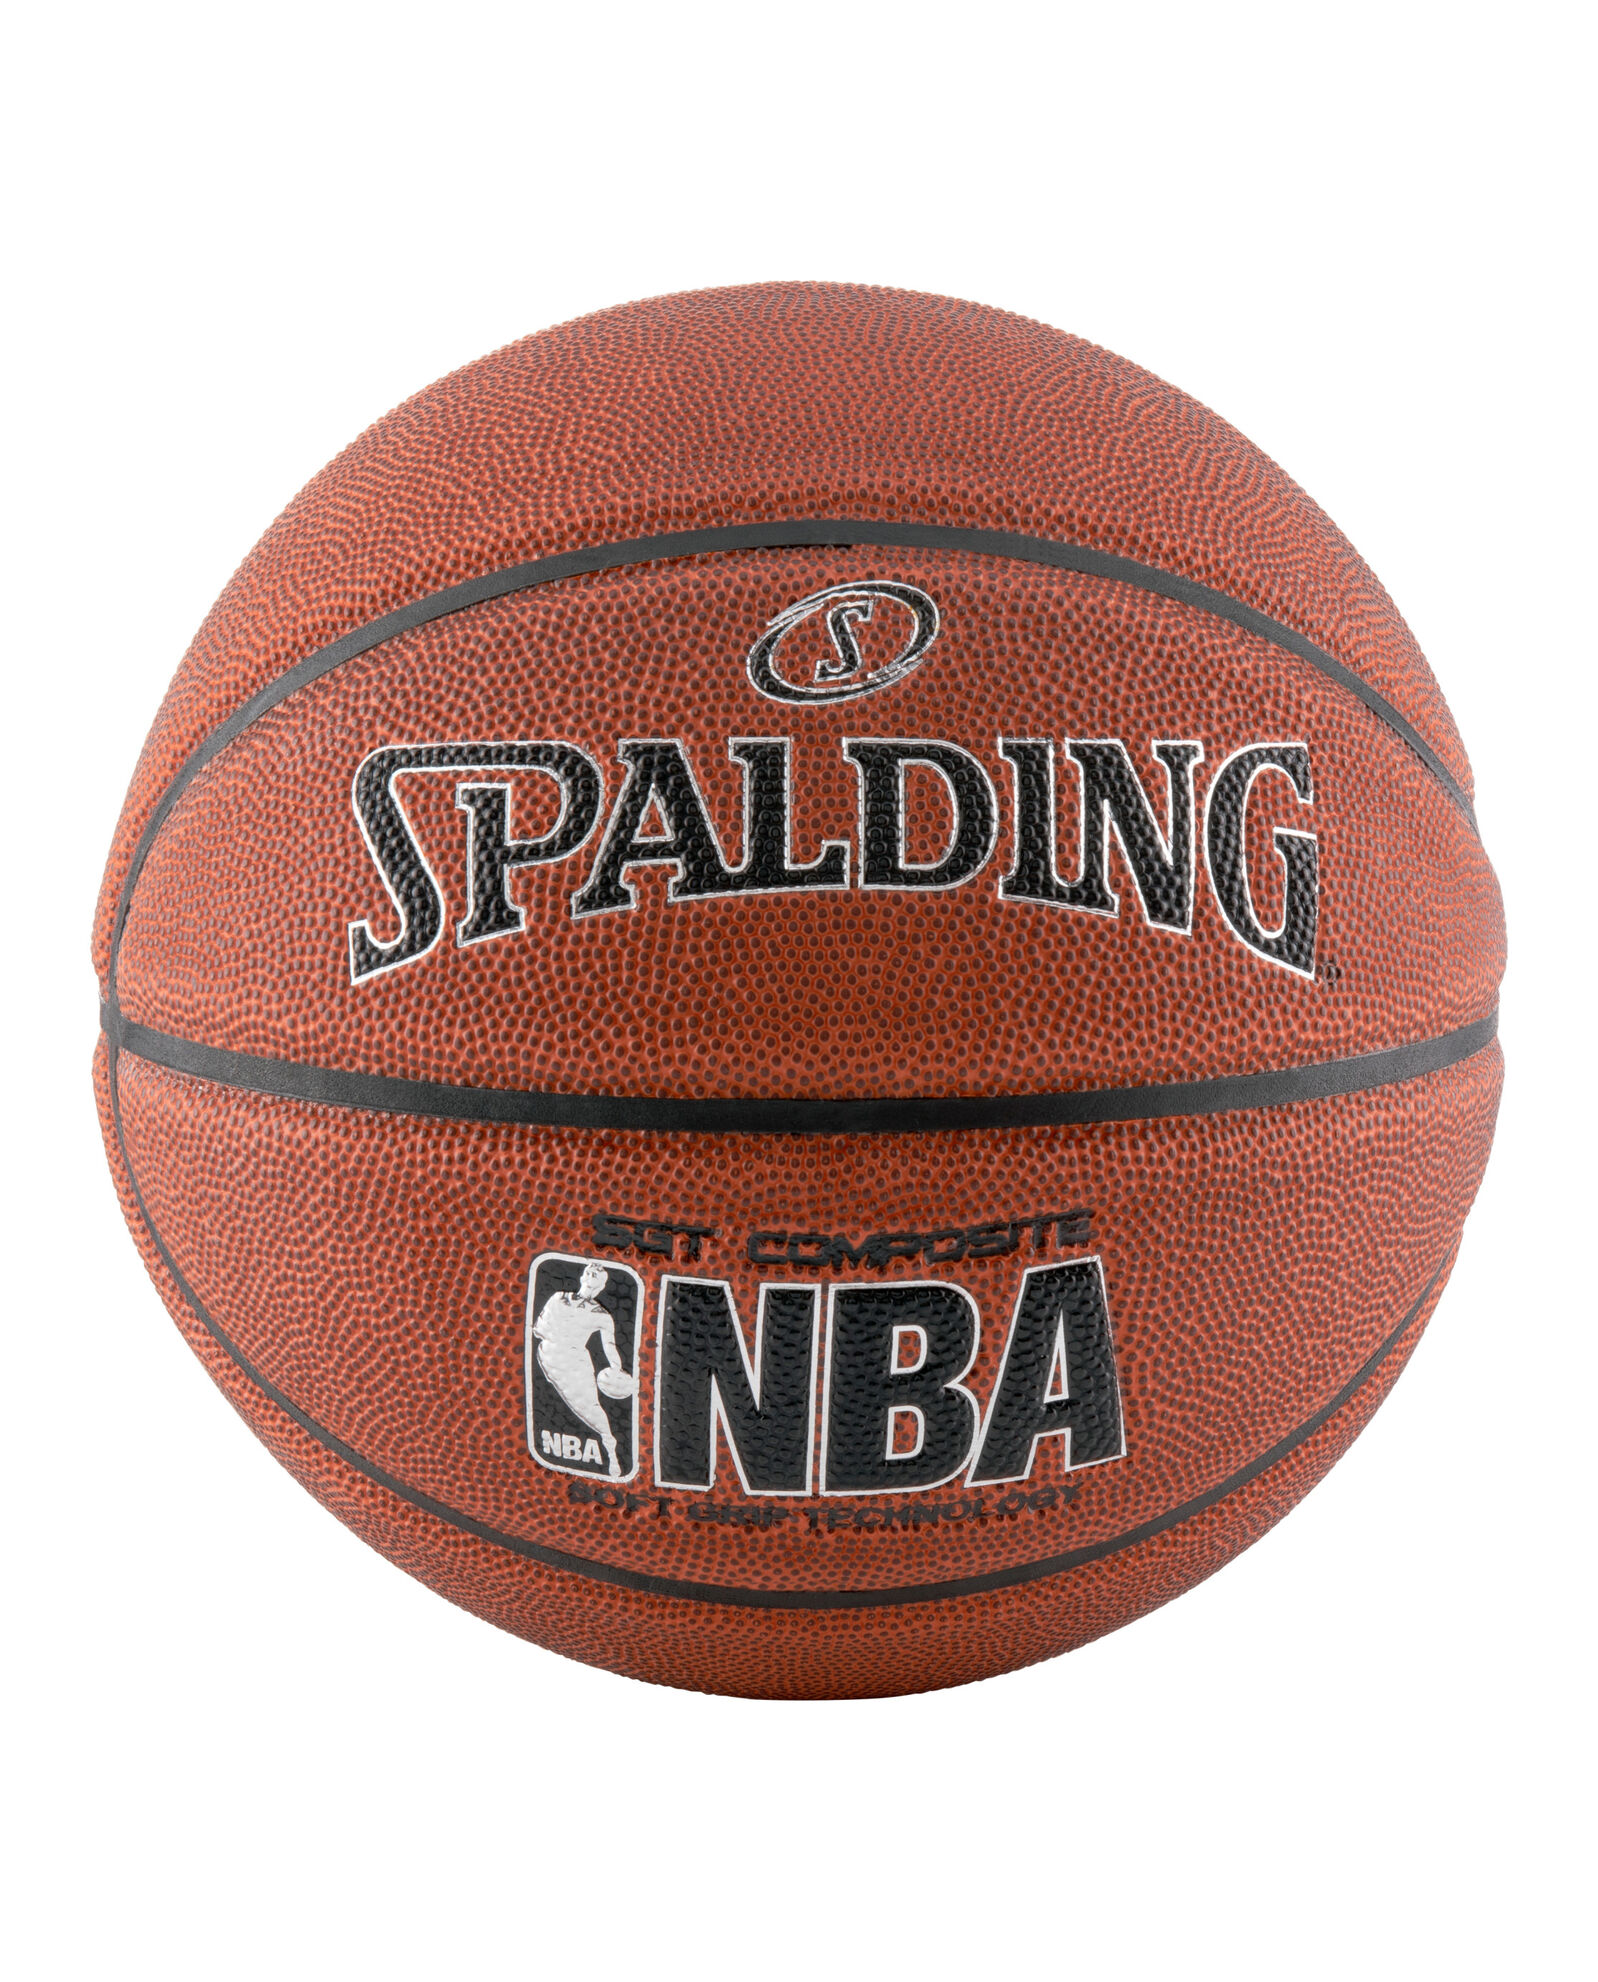 Spalding NBA SGT Indoor-Outdoor Basketball